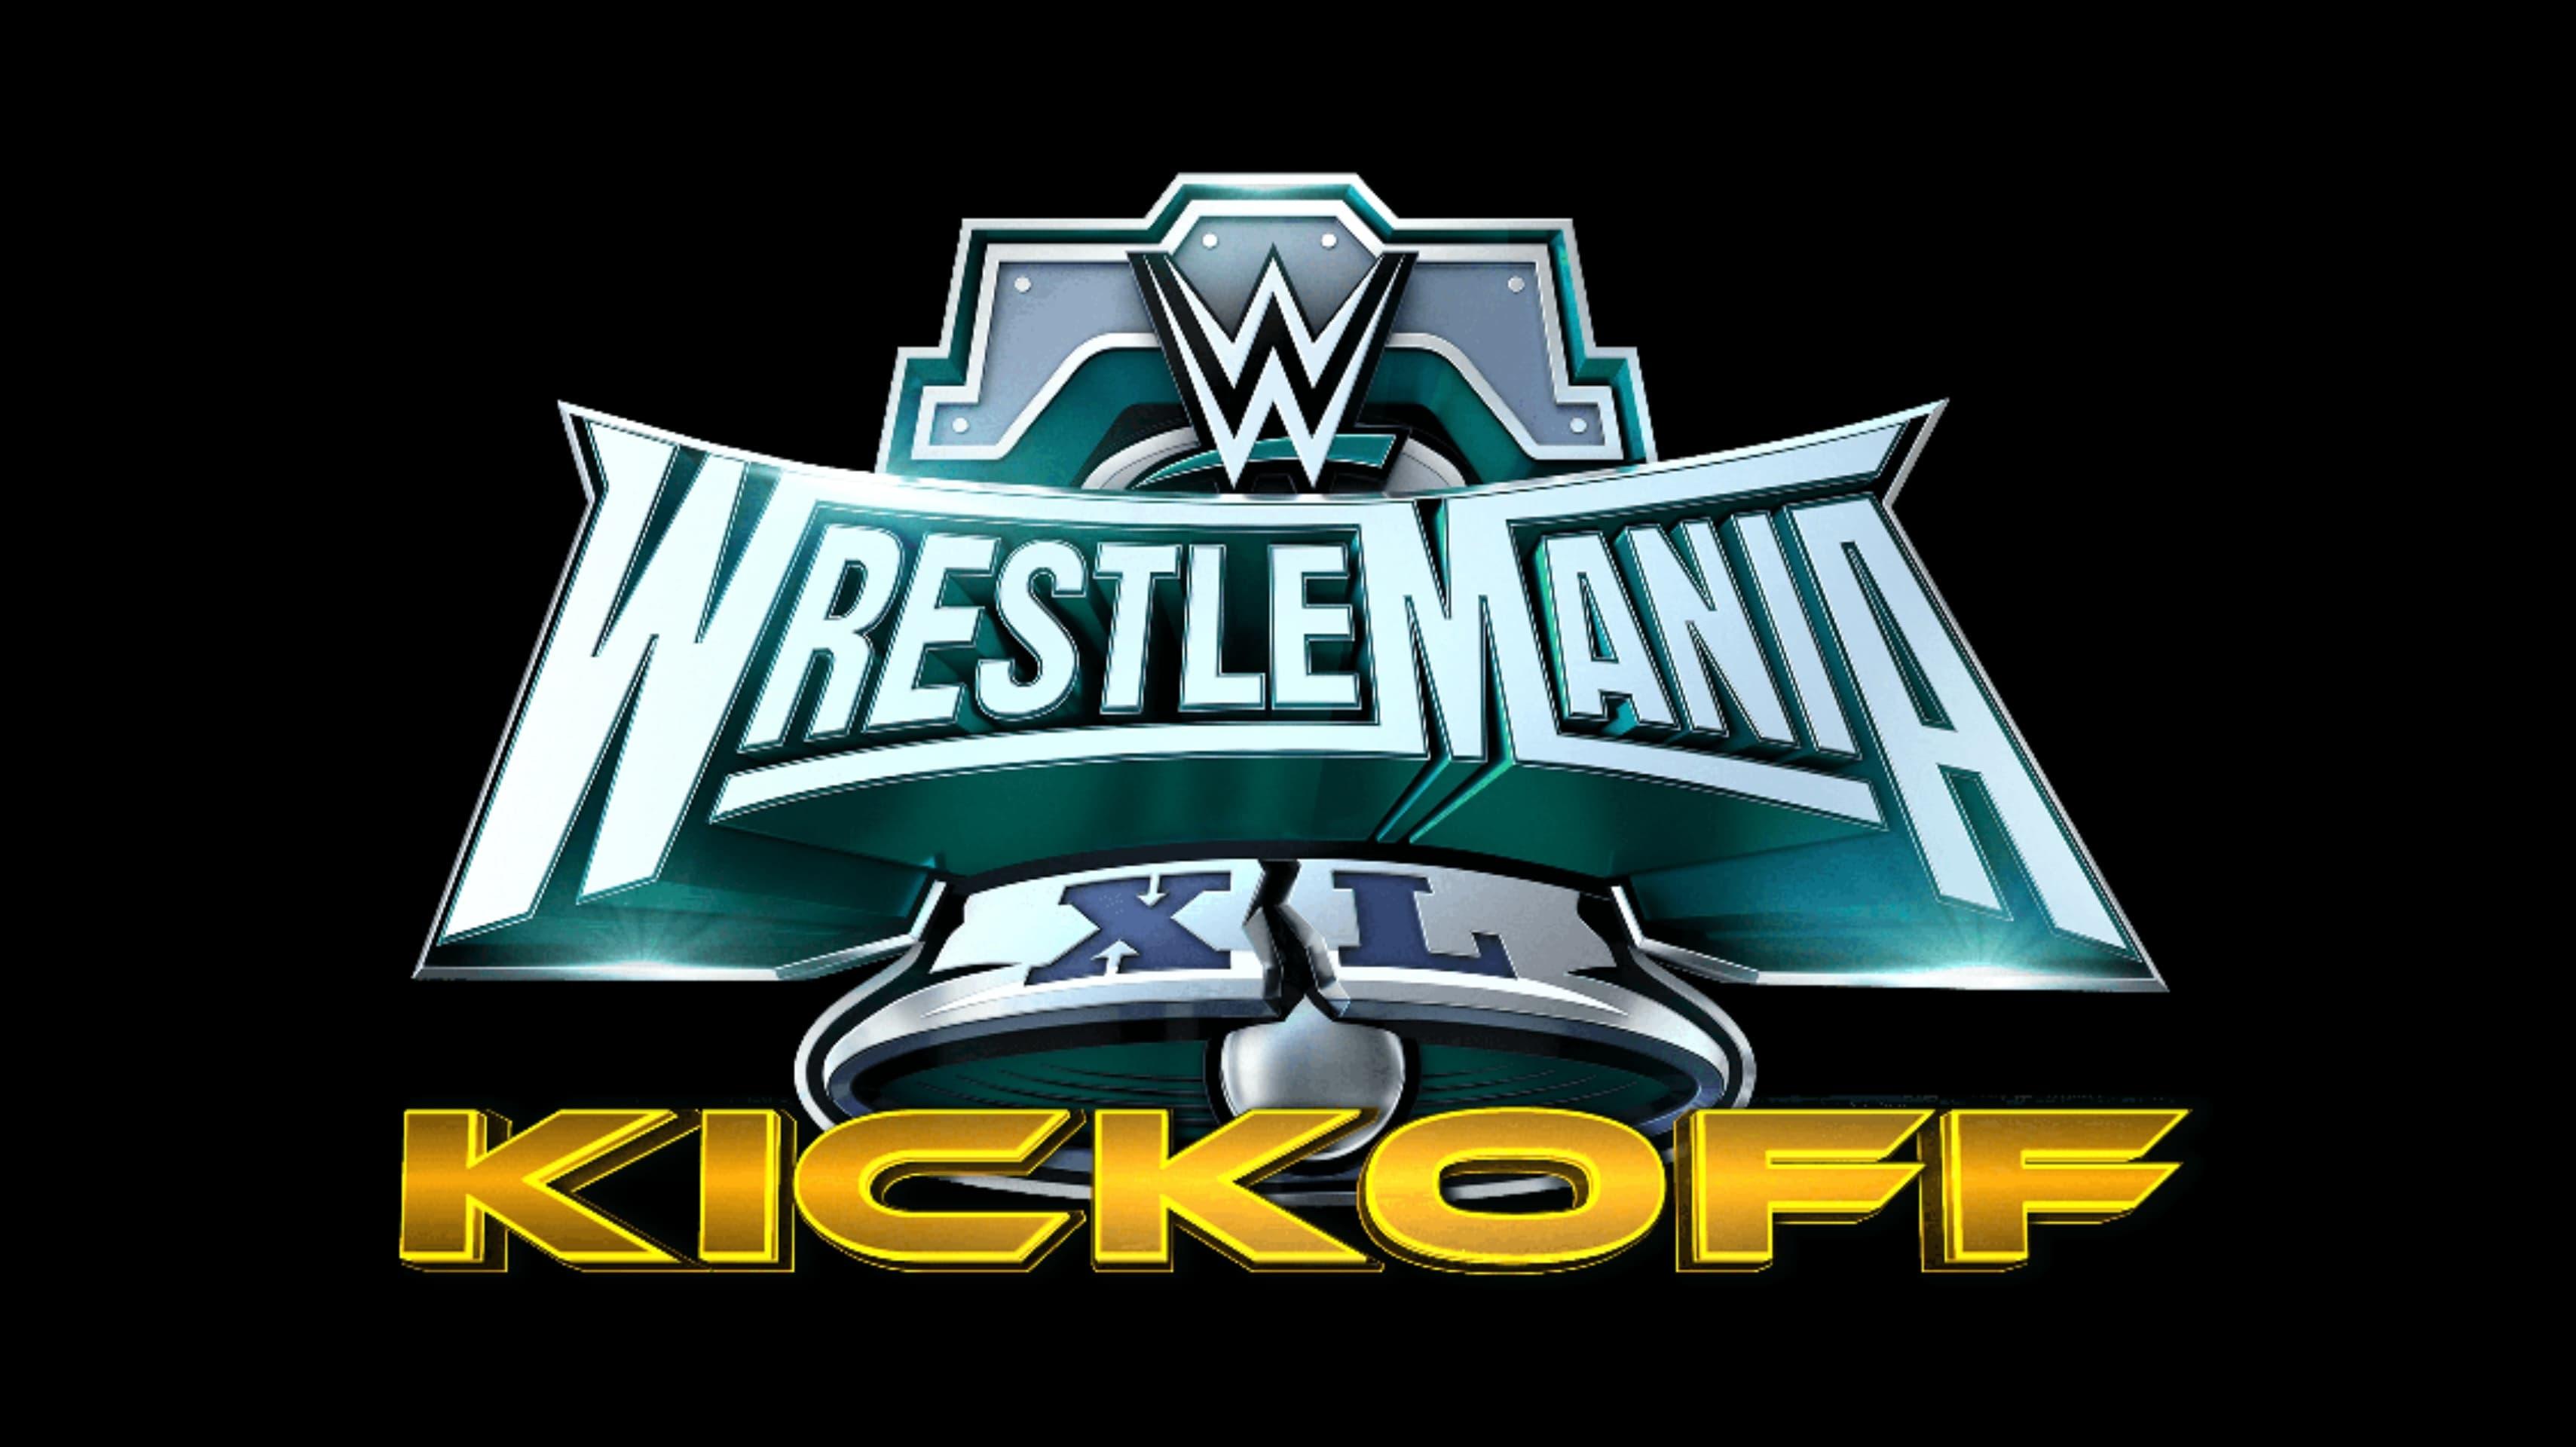 WWE WrestleMania XL Kickoff backdrop